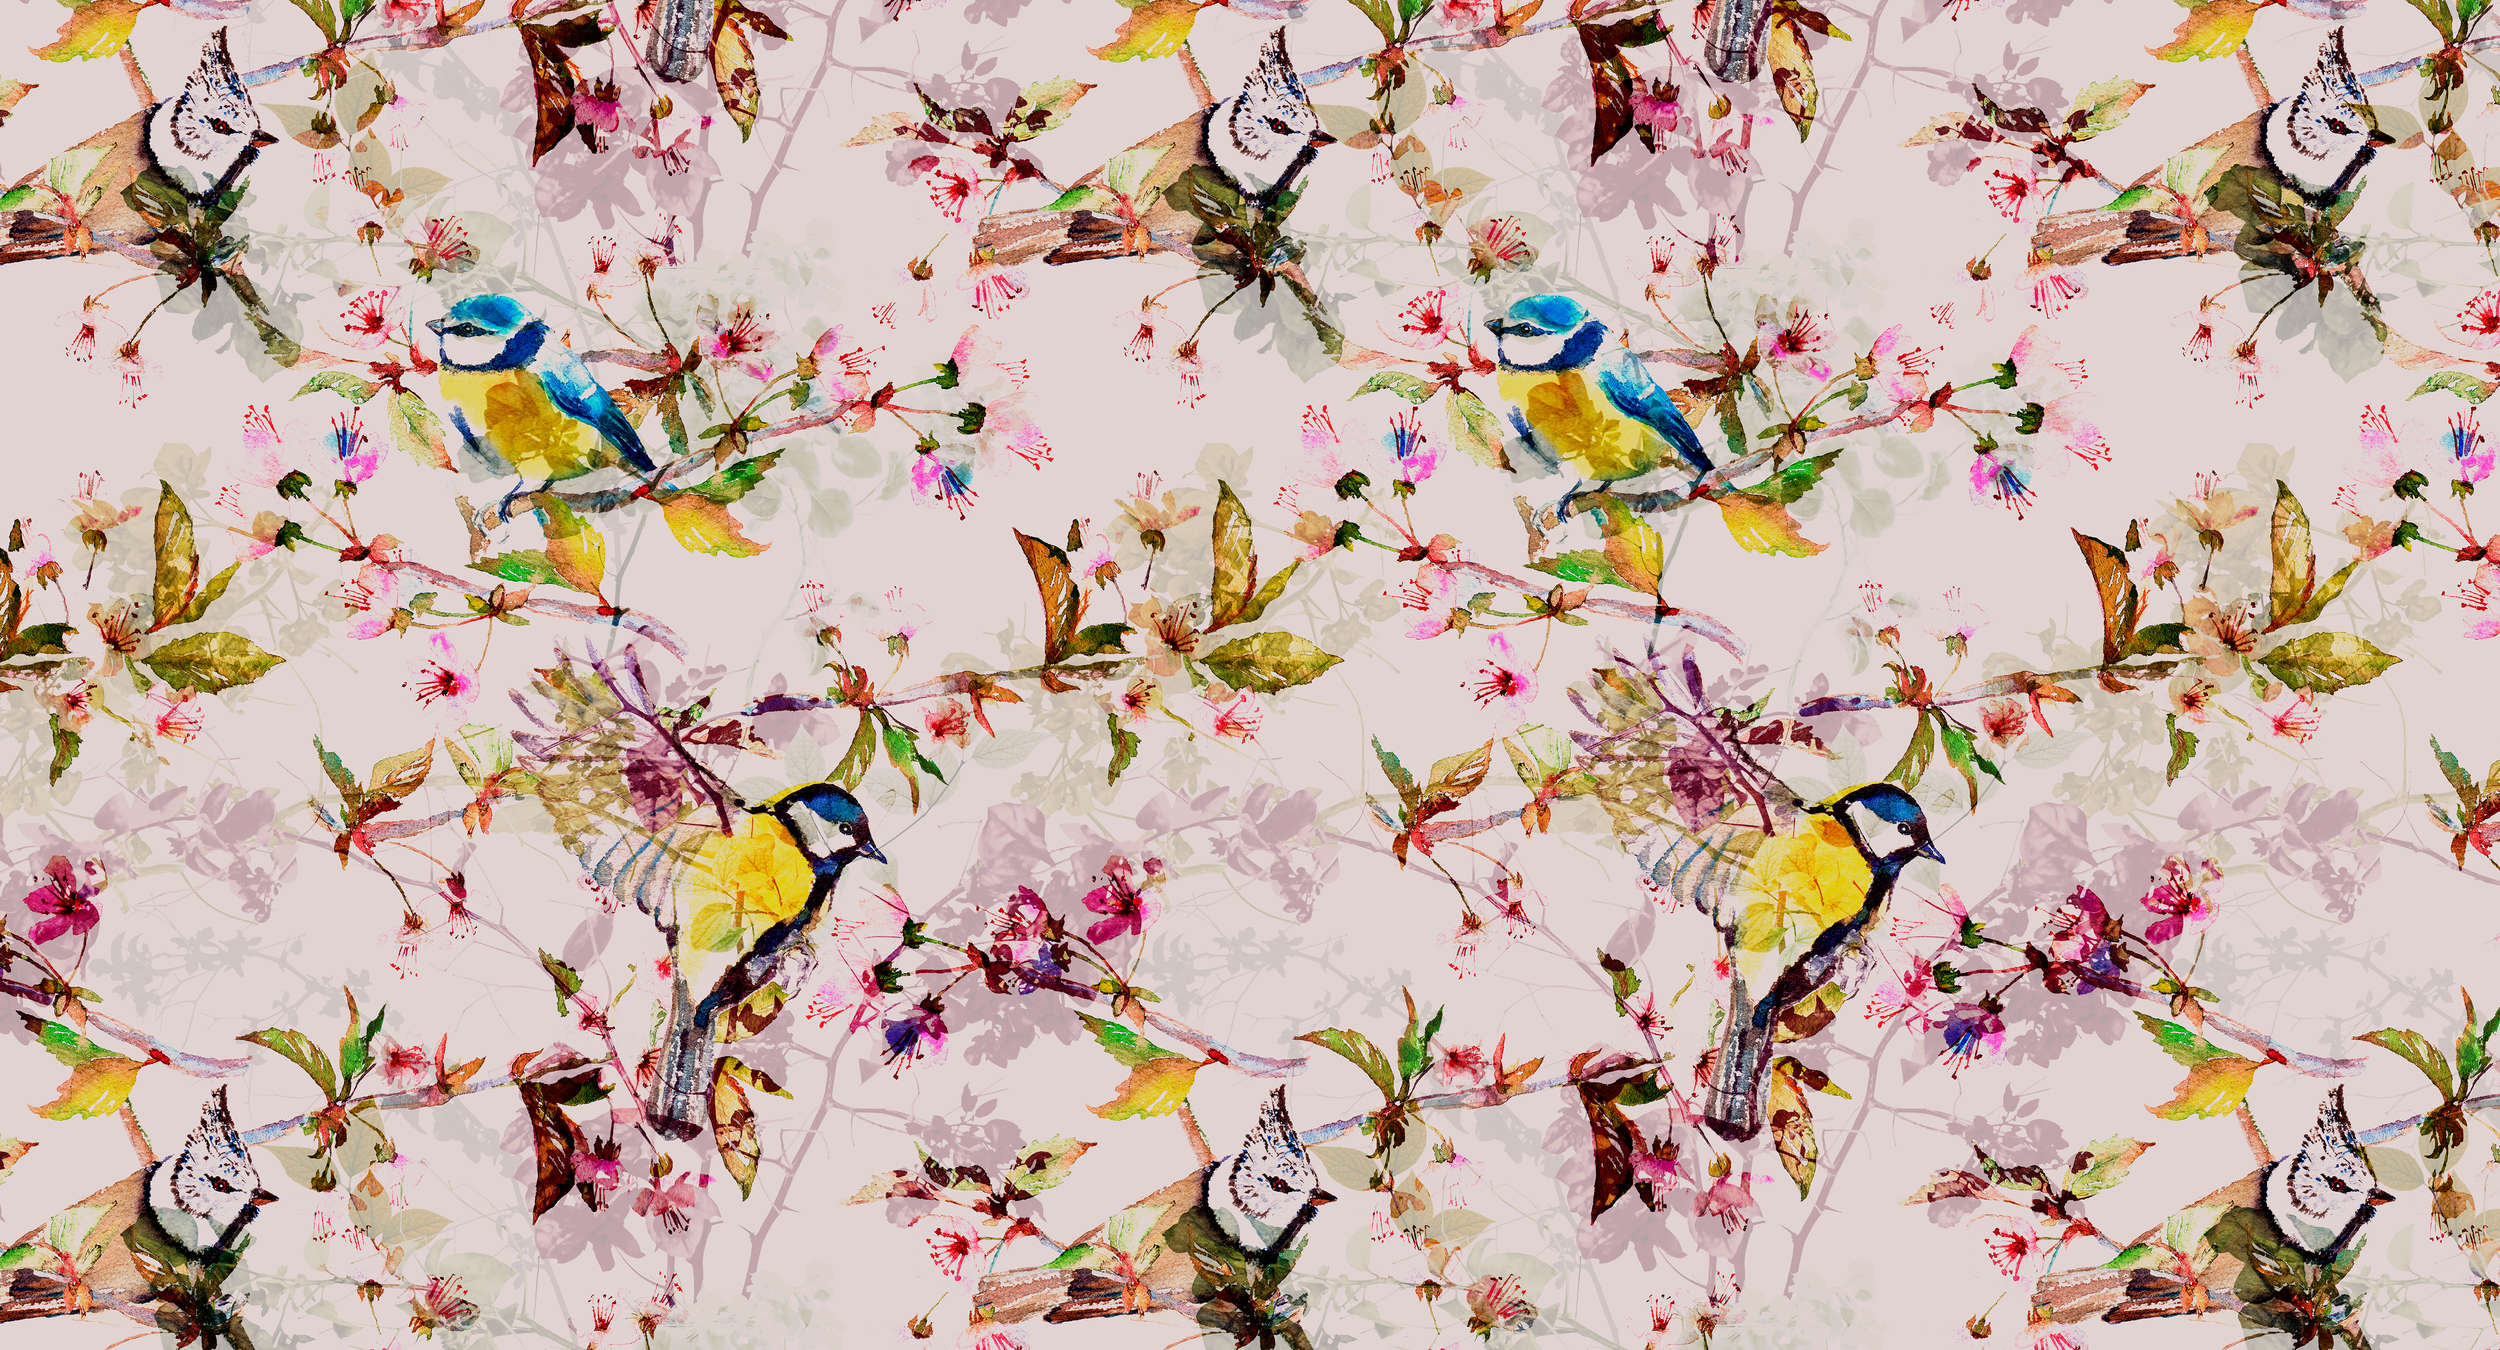             Birds Collage Style Behang - Roze, Geel
        